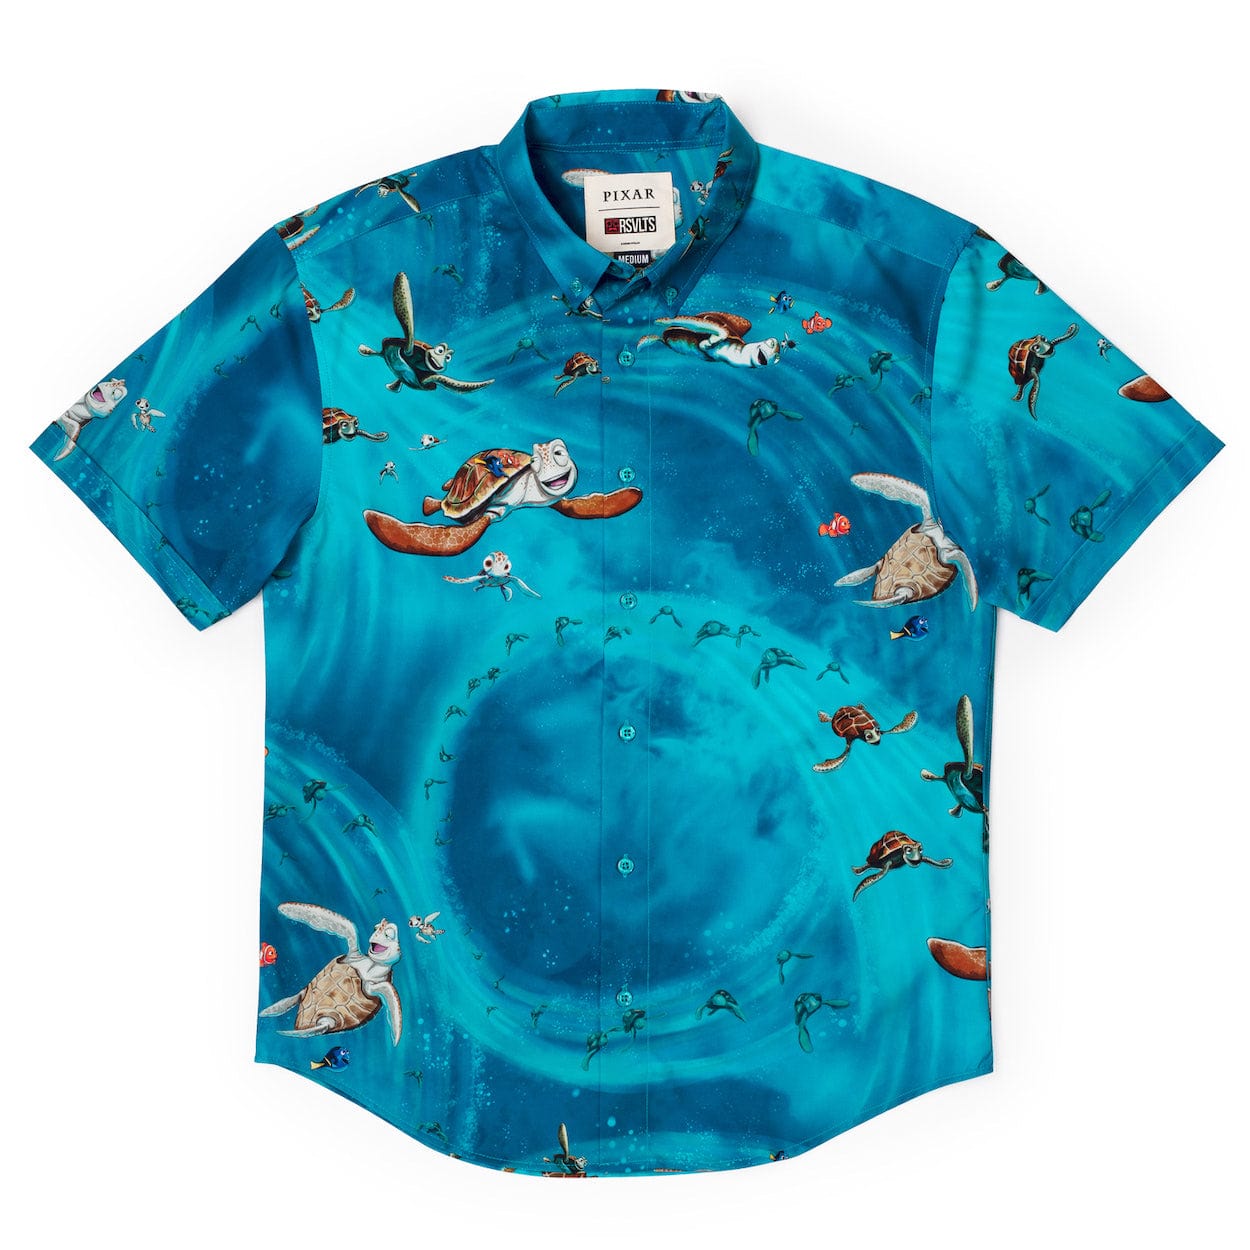 Finding Nemo The E.A.C. Dude! Short Sleeve Shirt